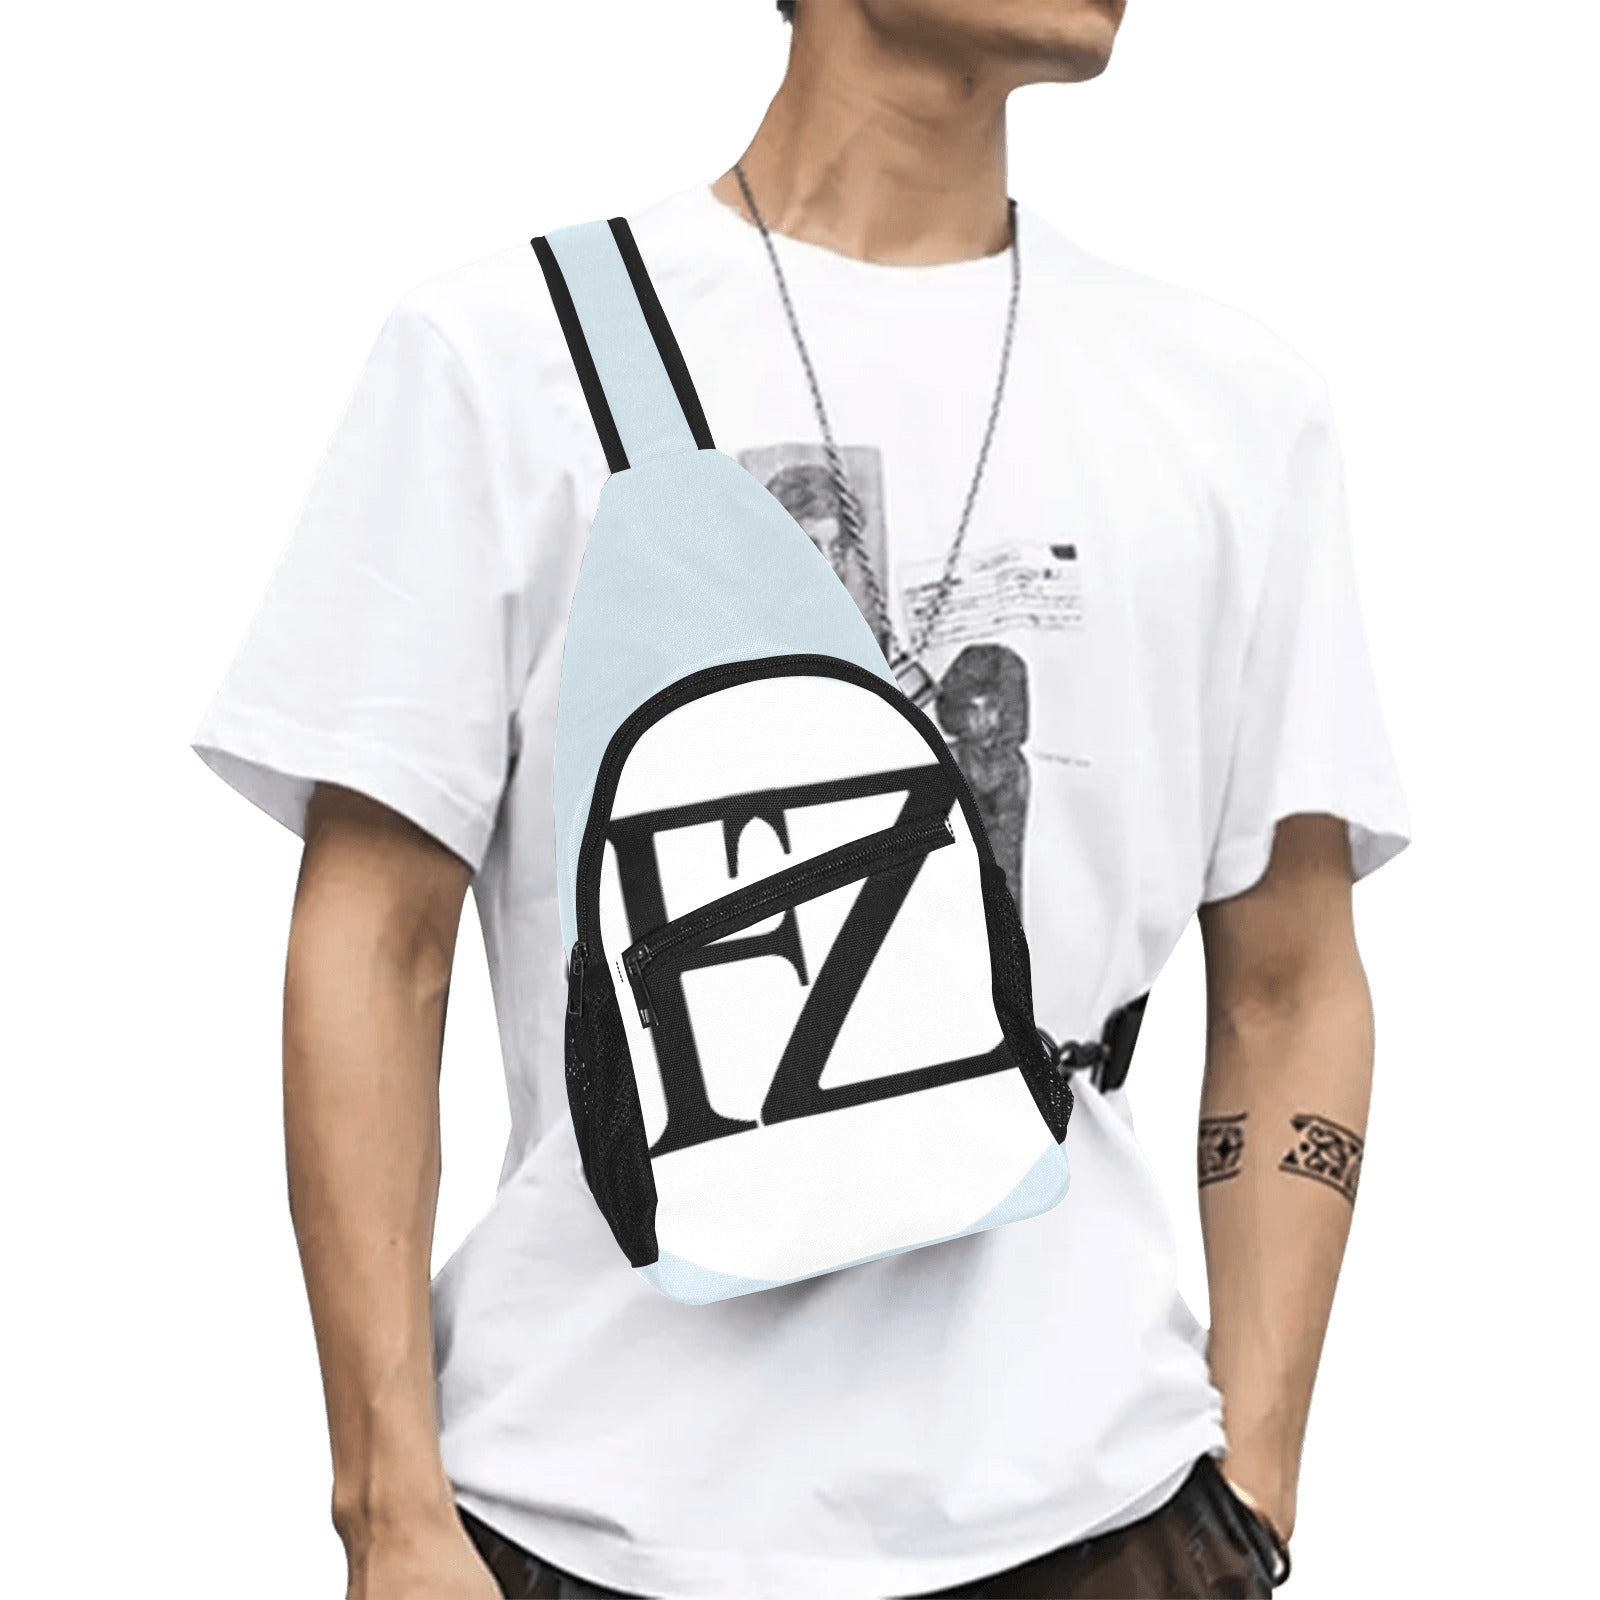 fz men's chest bag too one size / fz men's chest bag too-sky blue all over print chest bag(model1719)